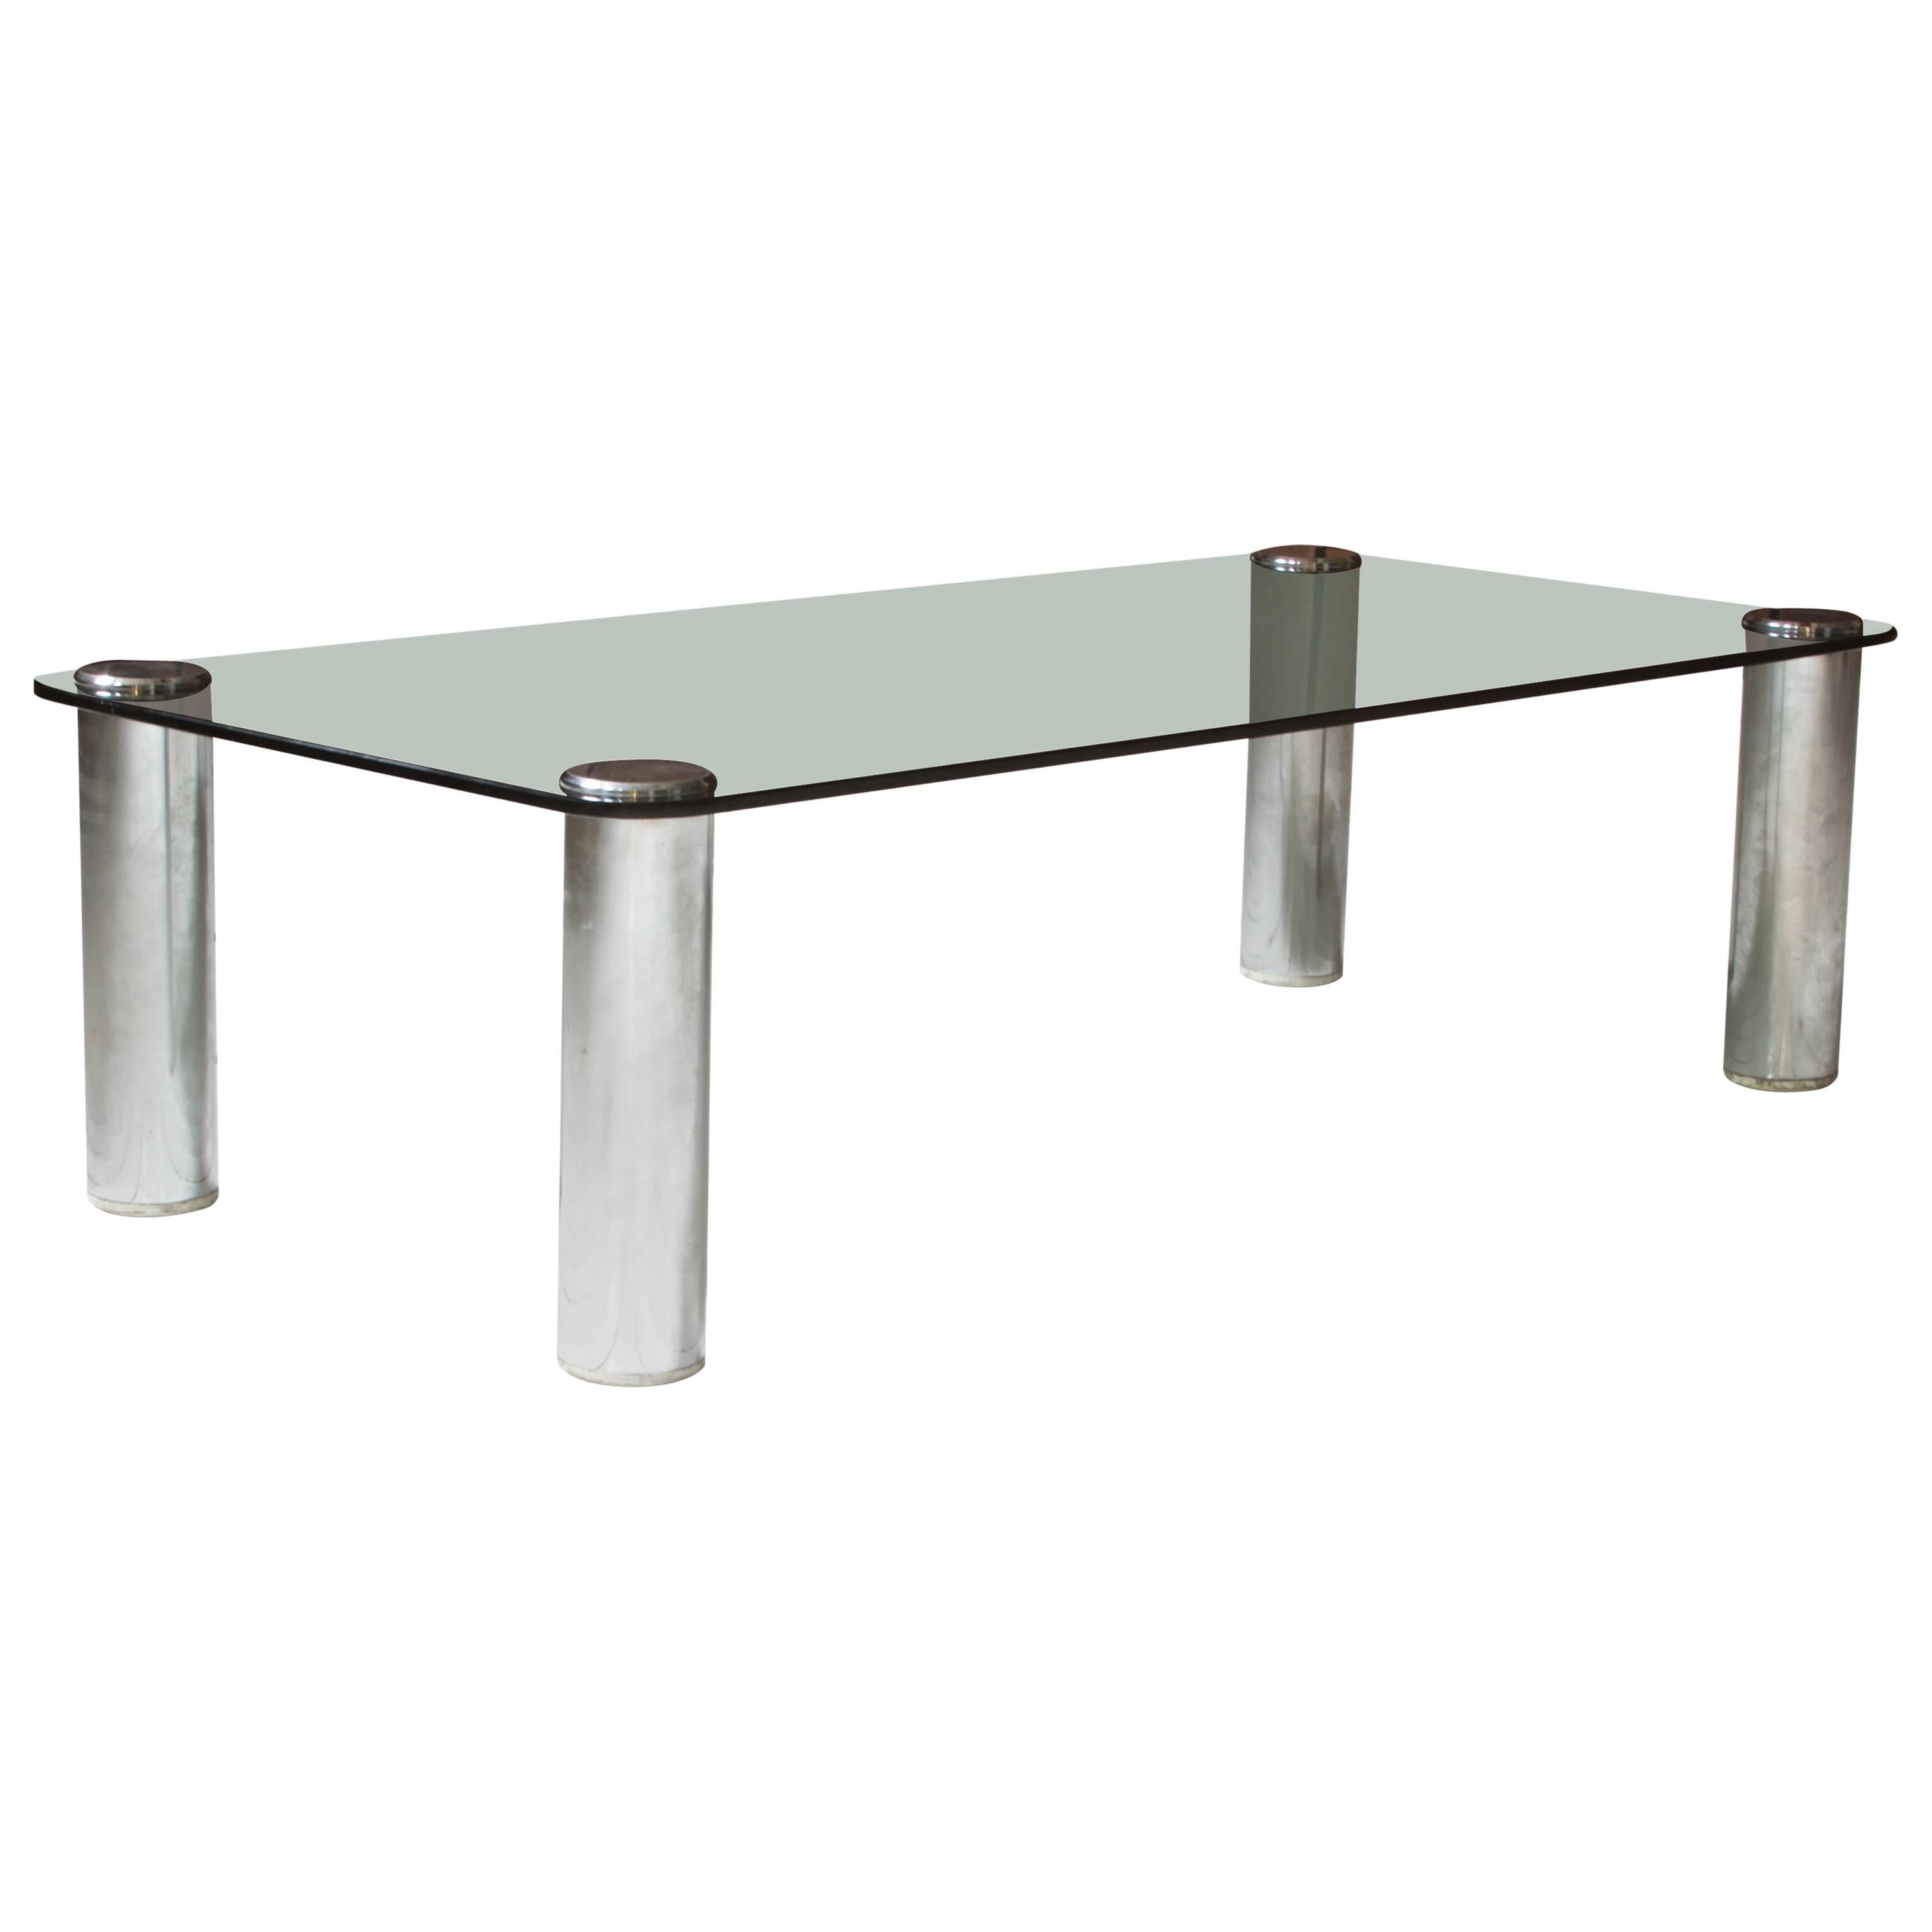 'Marcuso' Table in Smoked Glass & Chrome by Marco Zanuso for Zanotta, circa 1965